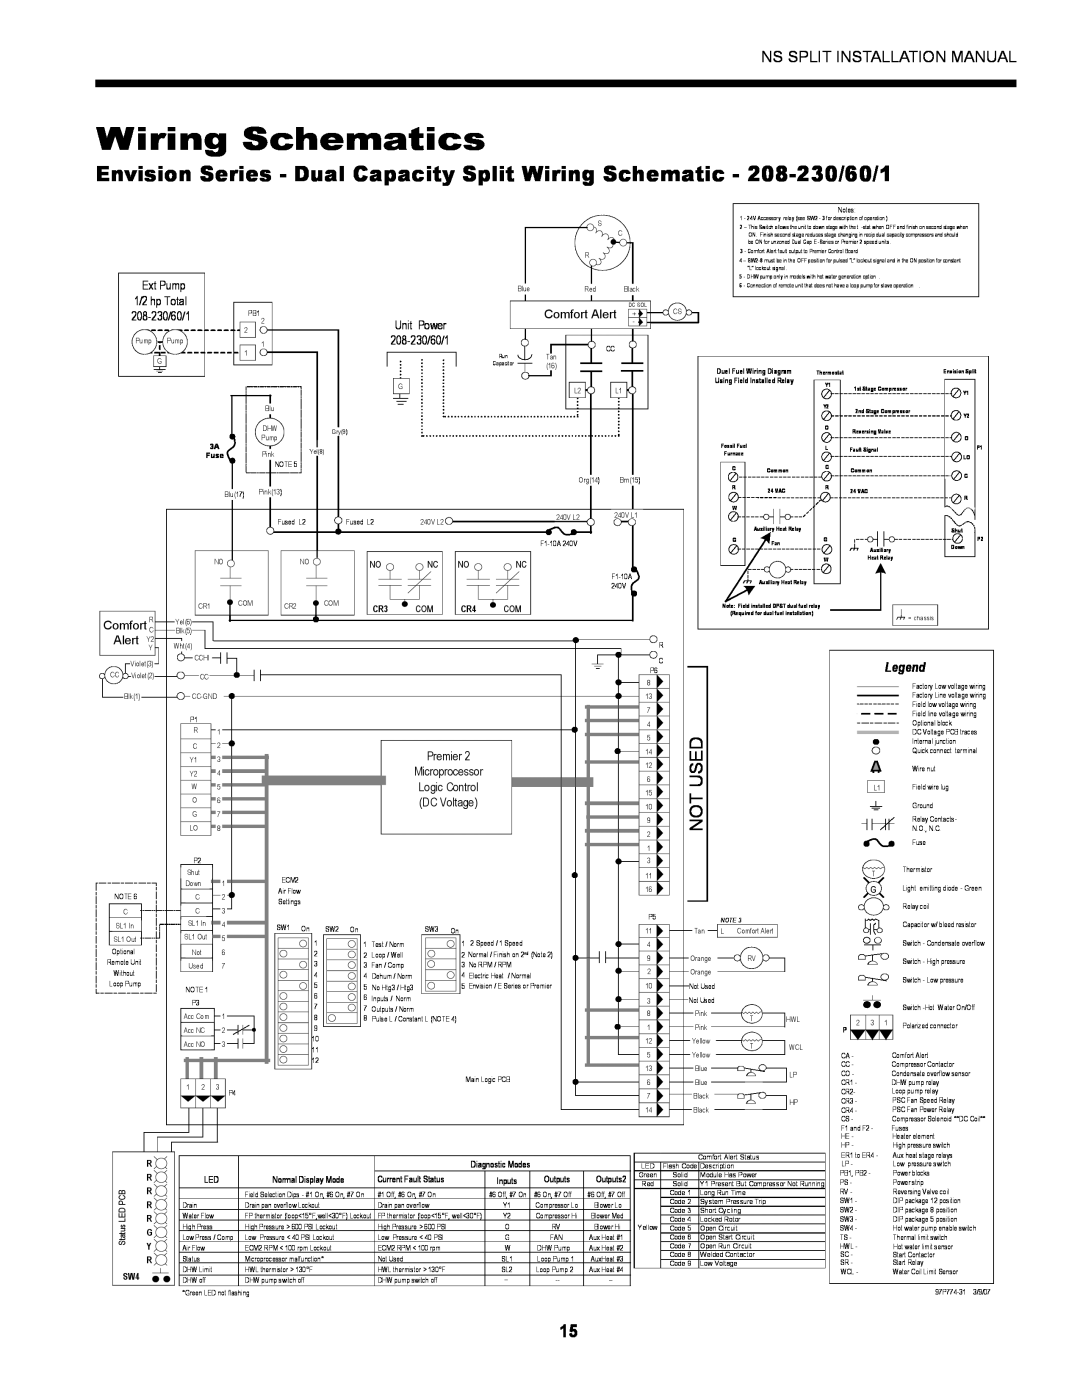 Envision Peripherals Series installation manual Wiring Schematics 